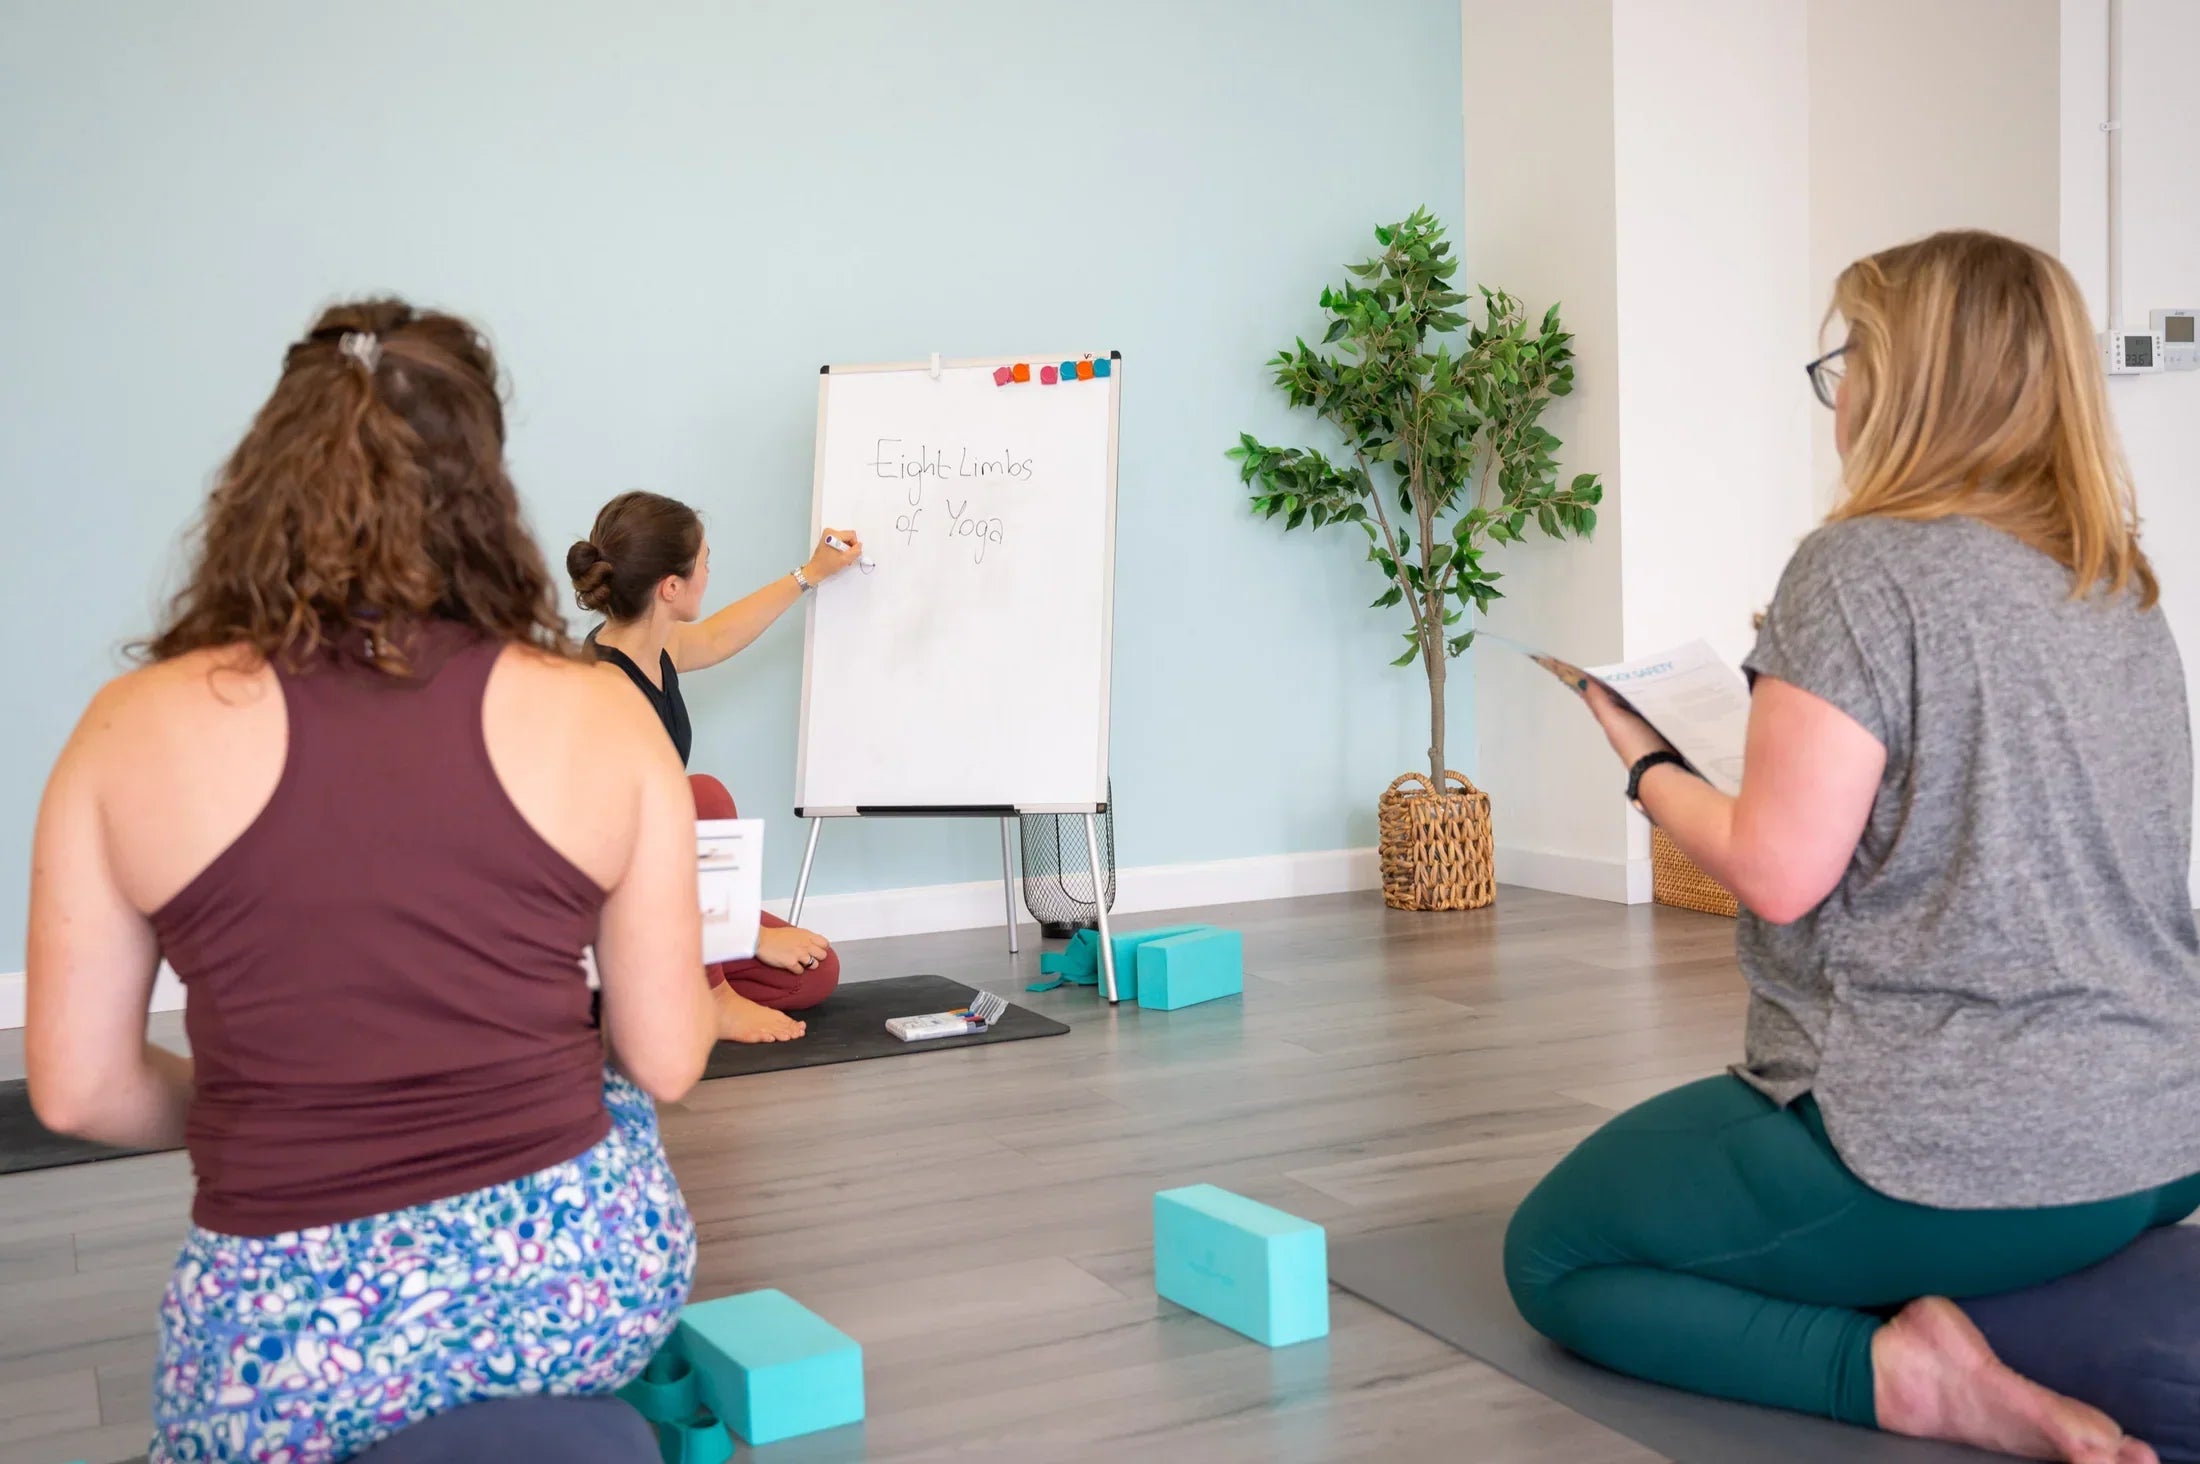 Yoga Teacher Training - 10 Month Course - Burton (September 2024)